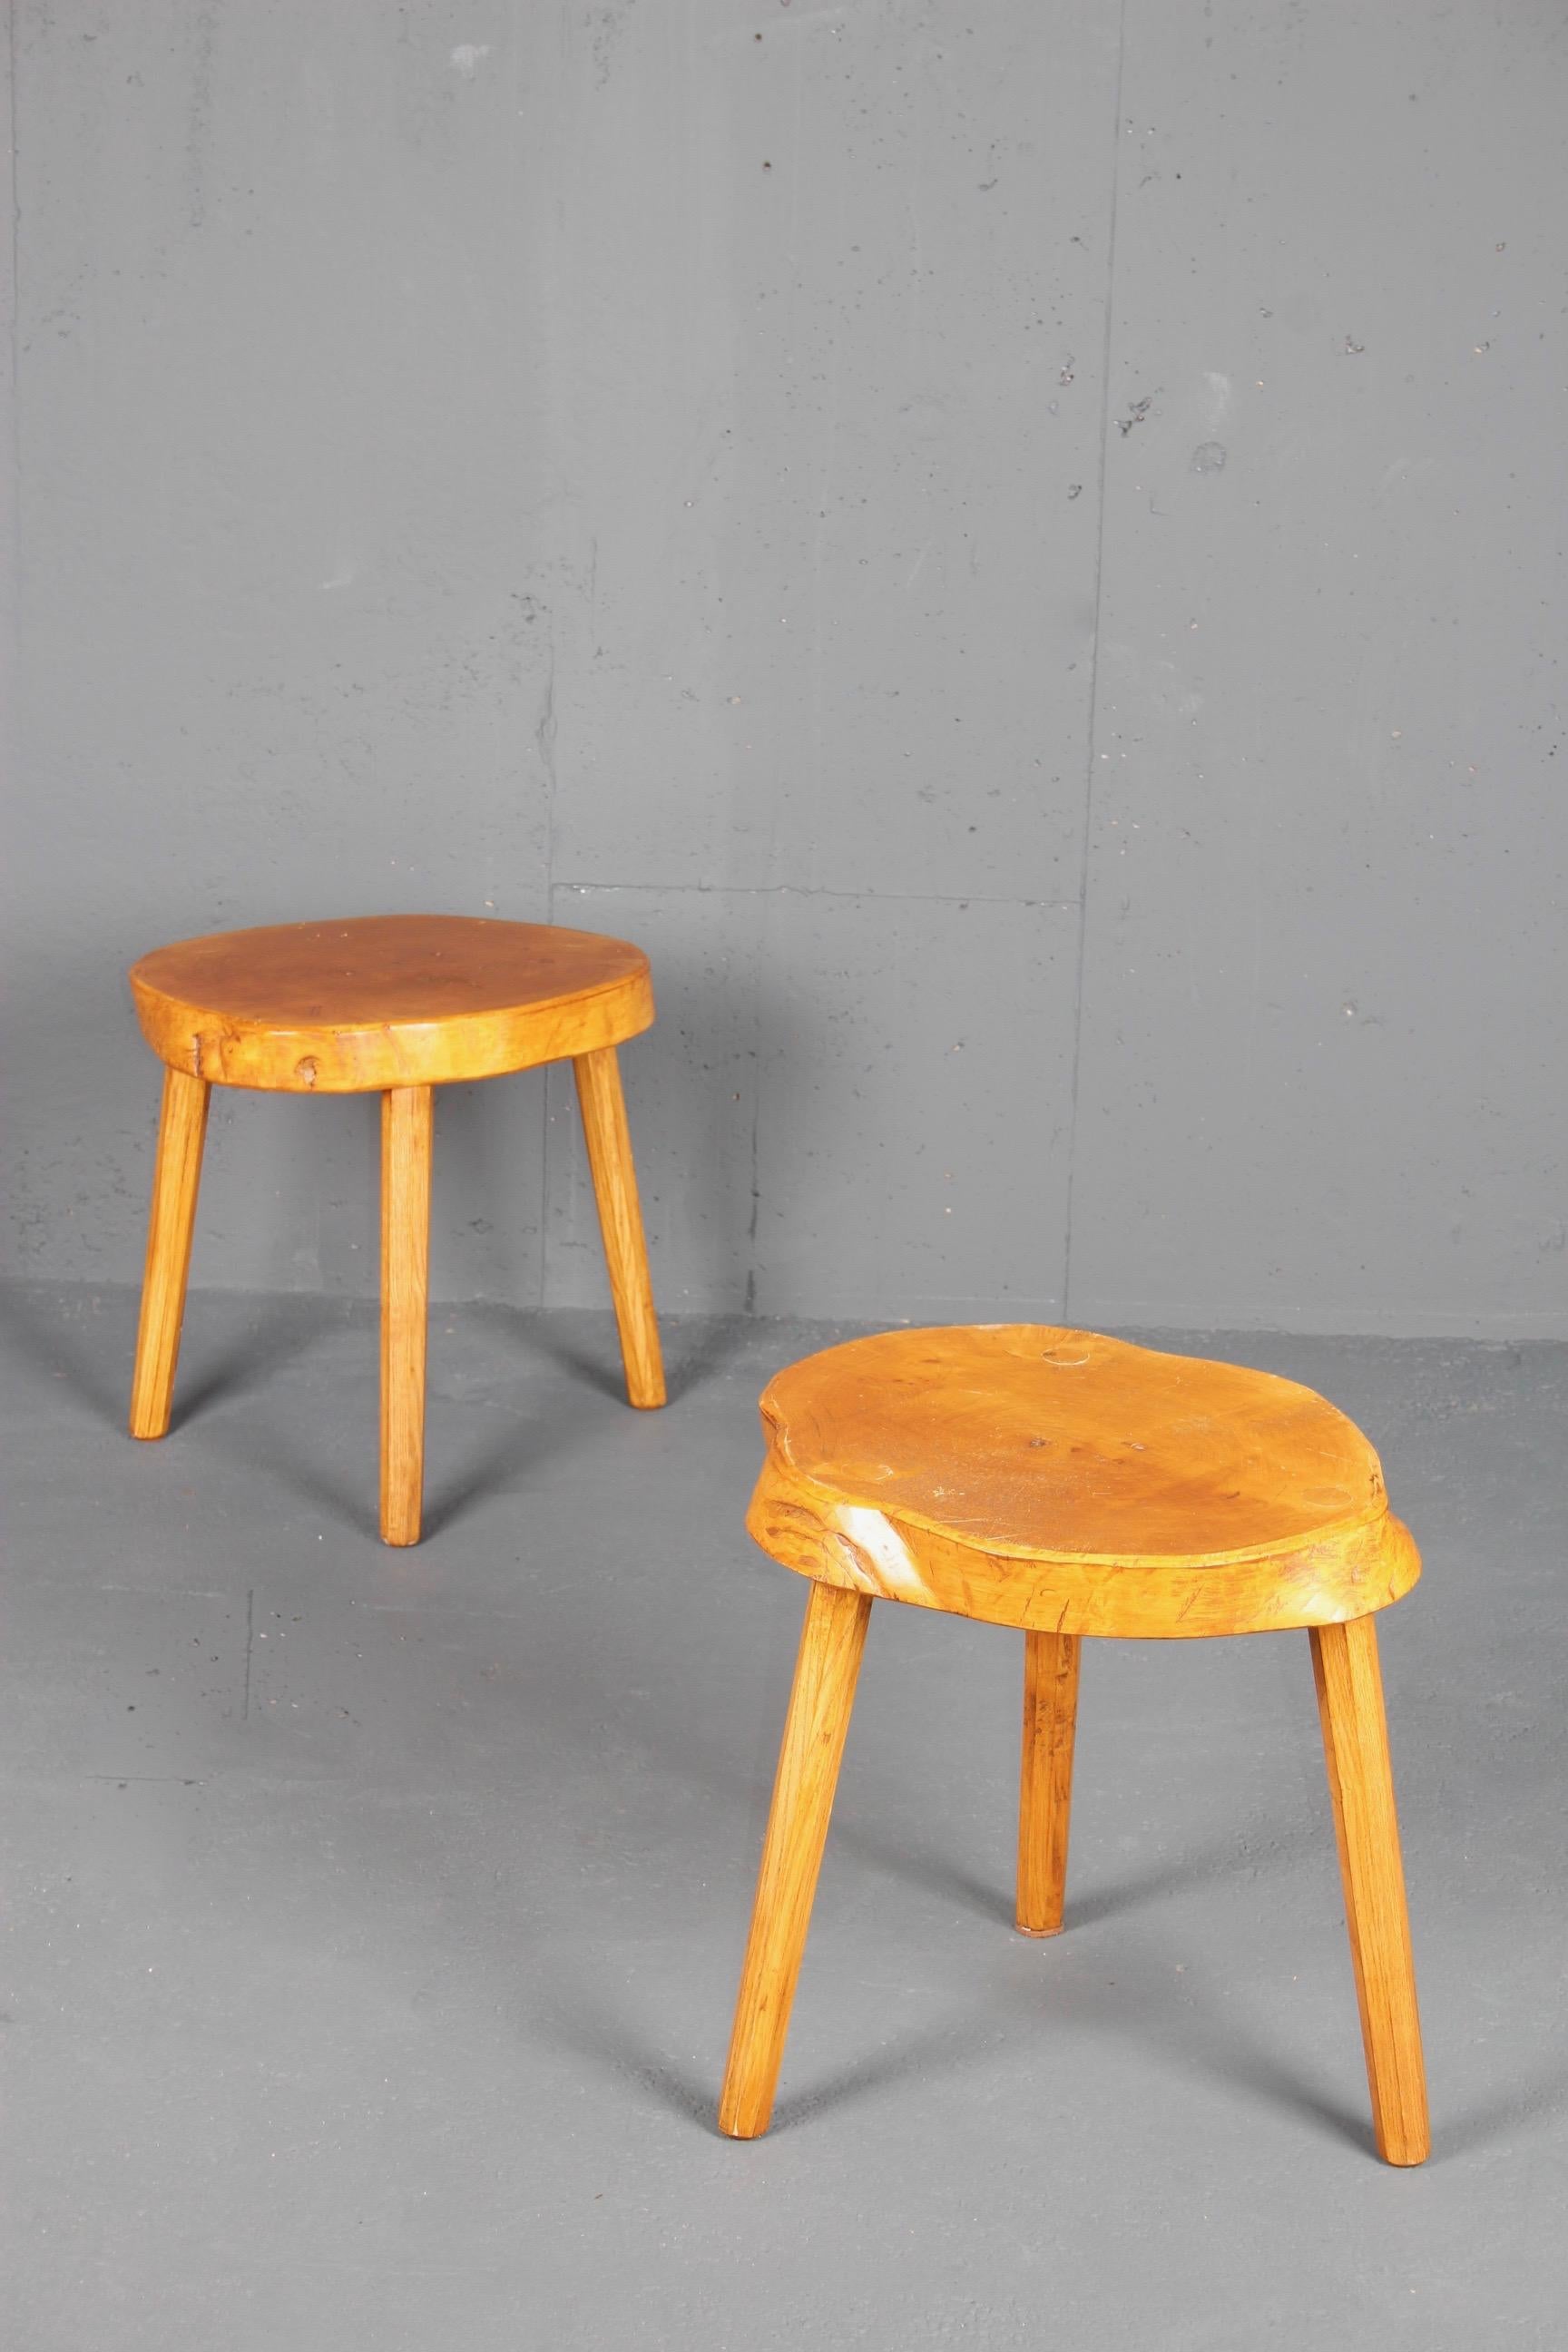 Pair of wood forme libre stools.